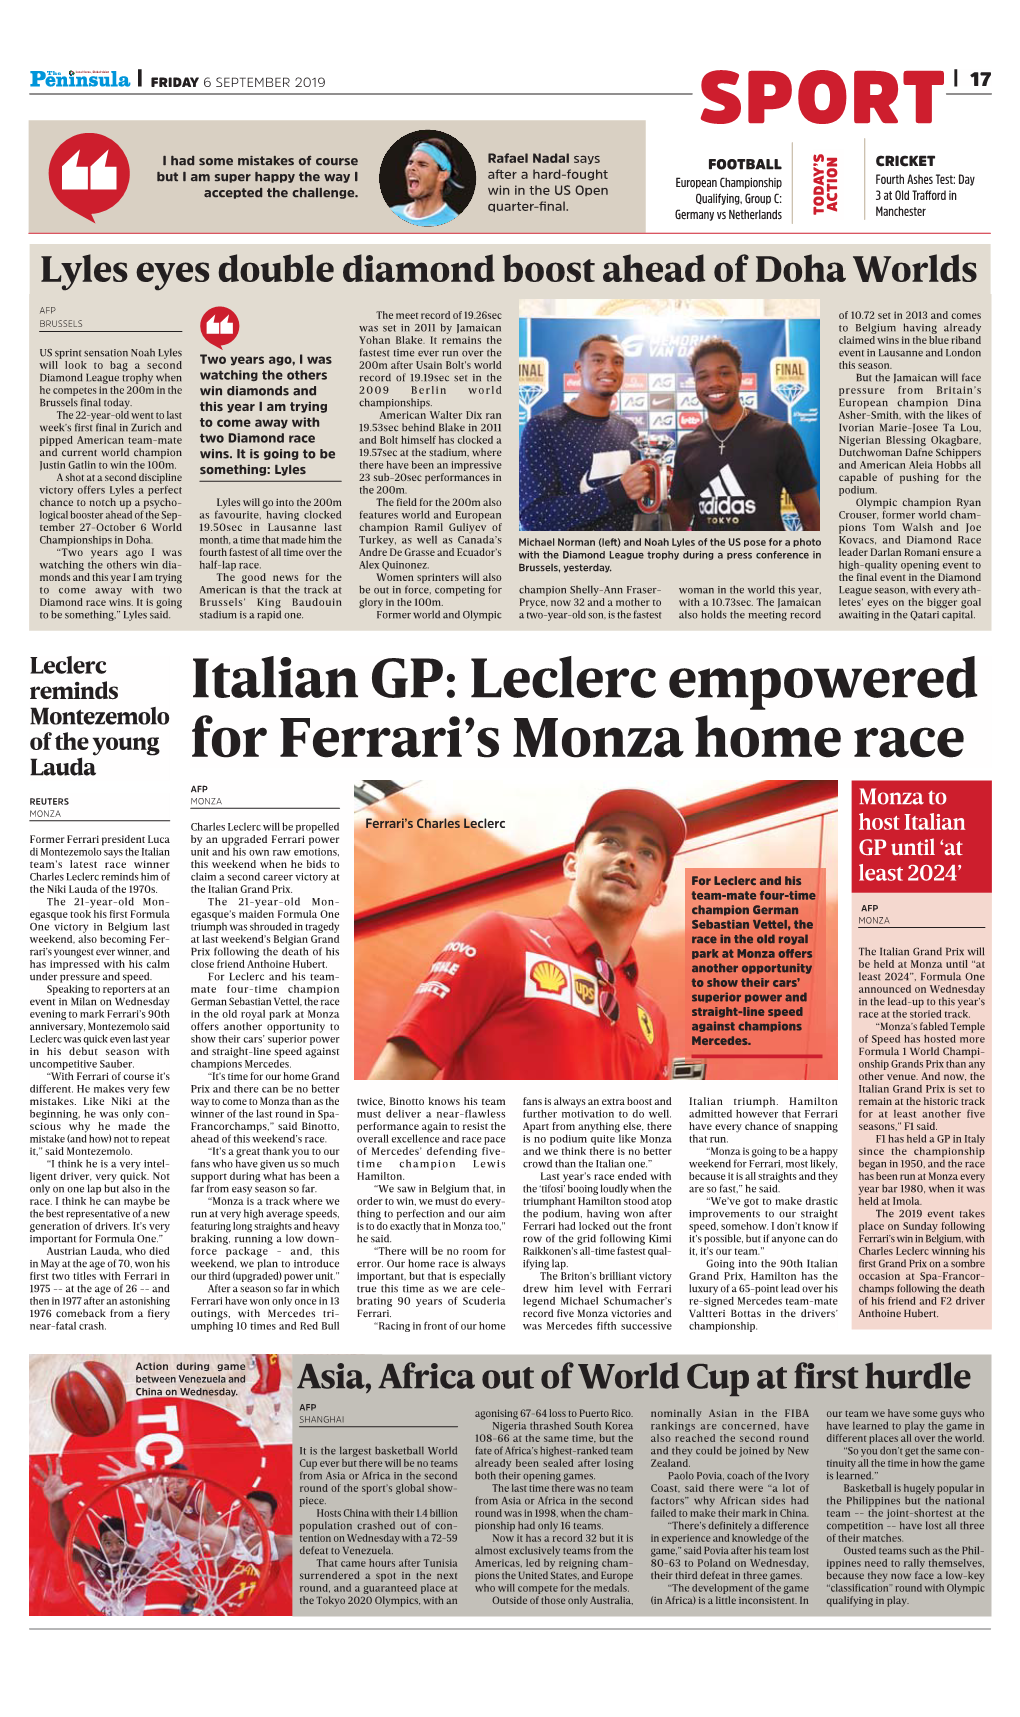 Leclerc Empowered for Ferrari's Monza Home